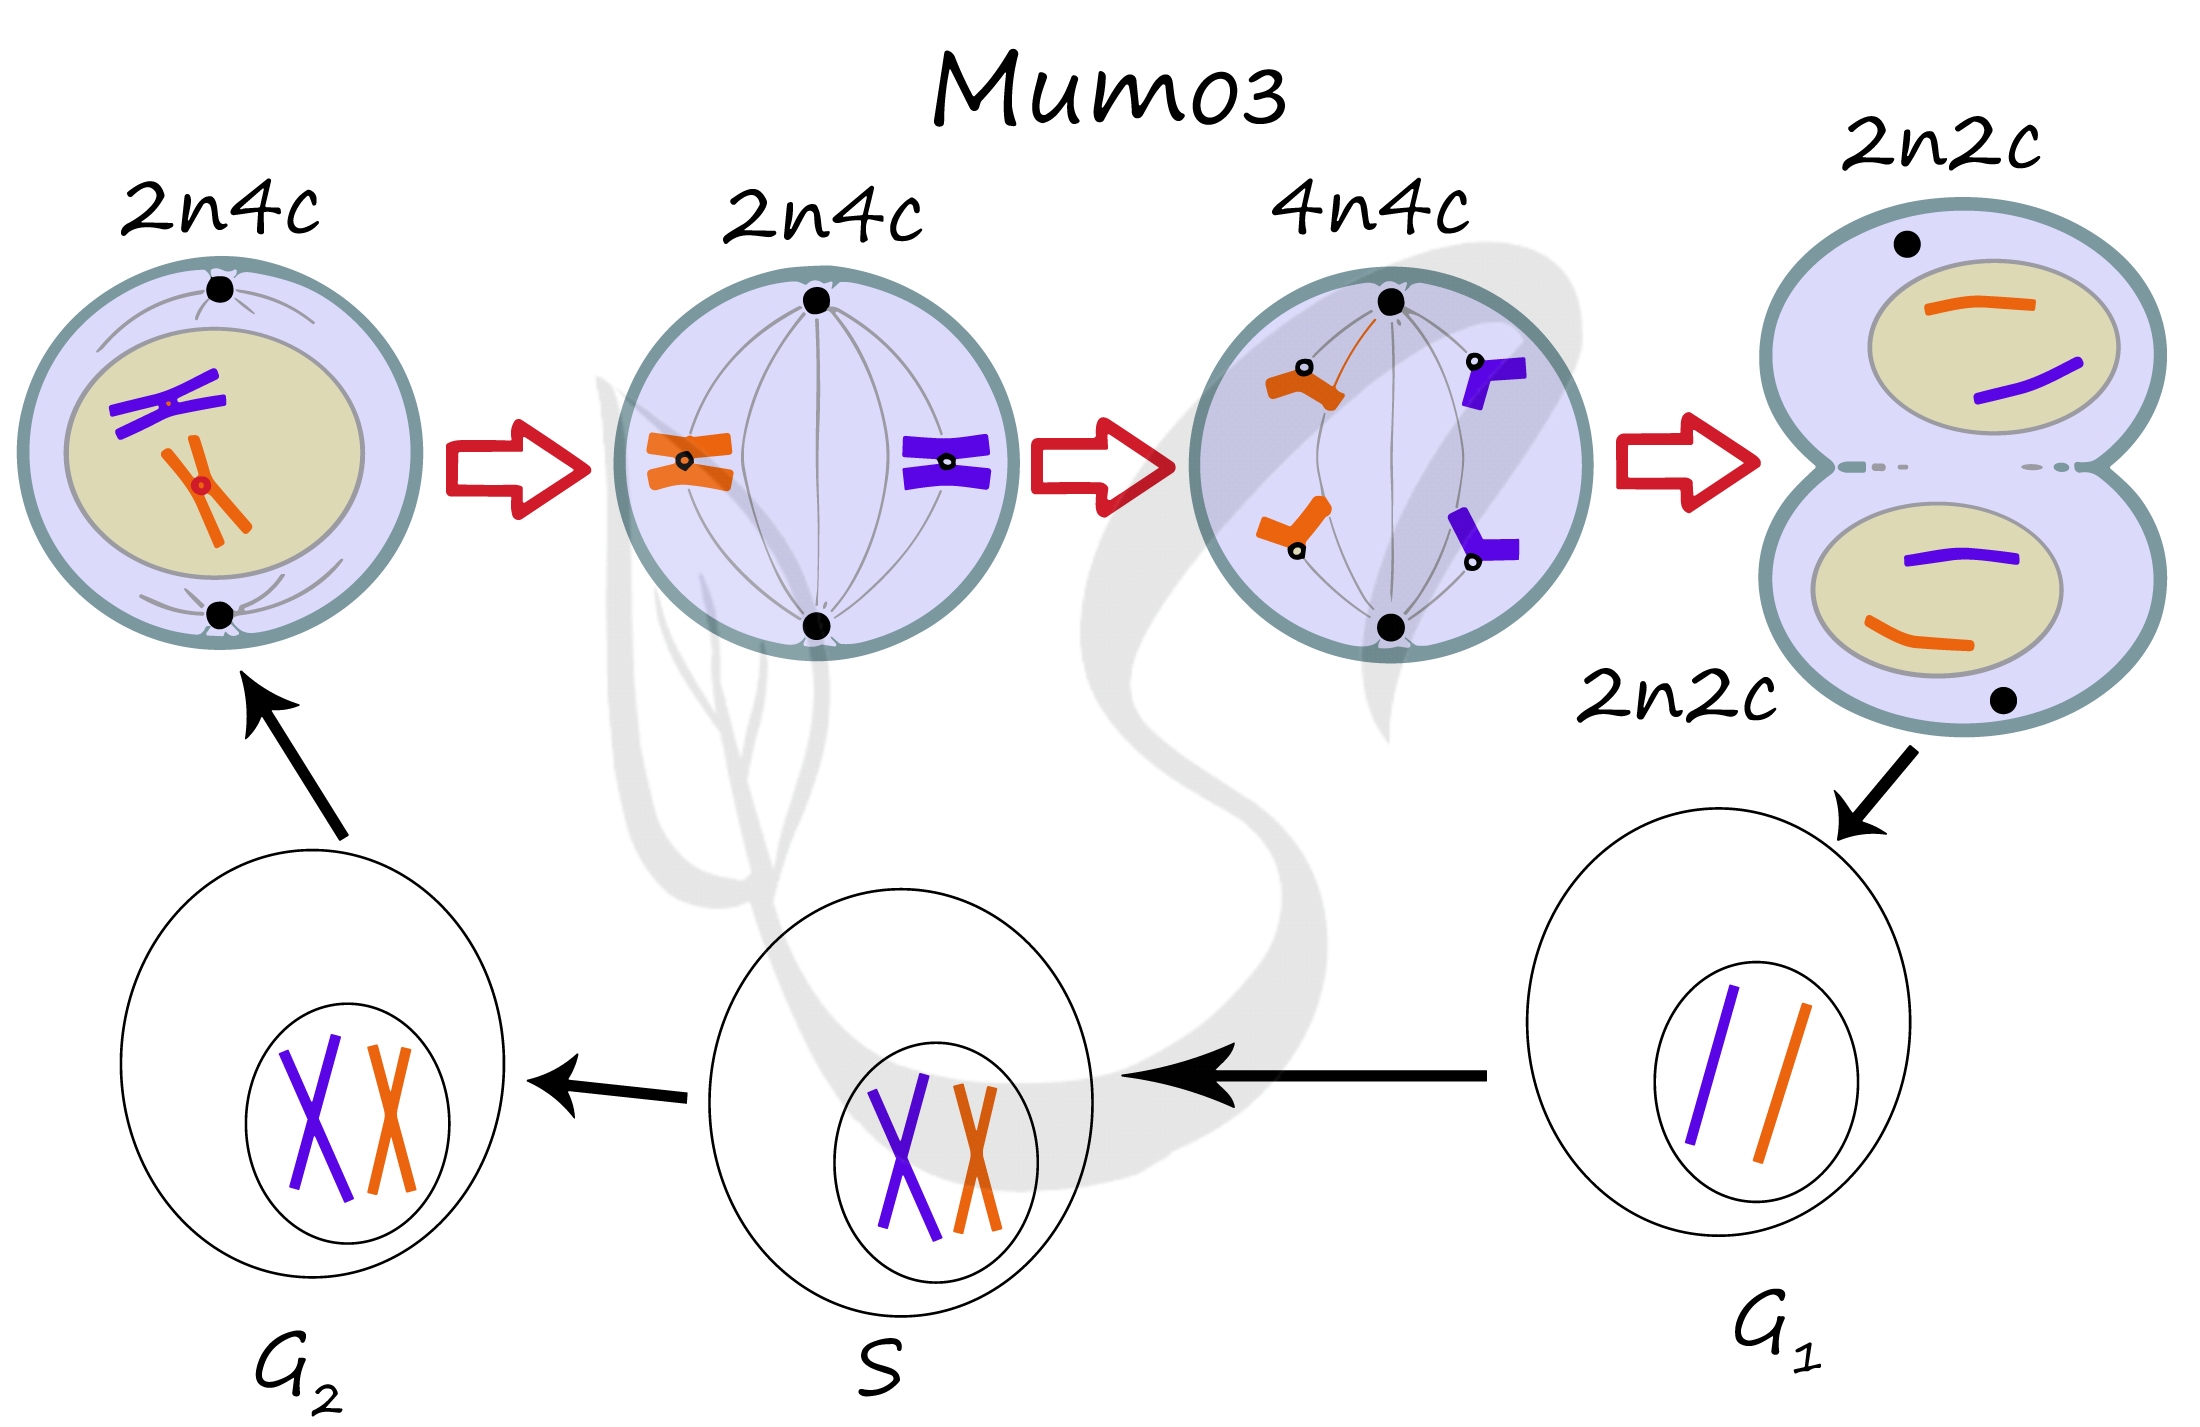 4n4c какая фаза. Схема митоза 2n. Схема мейоза для клетки с хромосомным набором 2n 6. Фазы митоза 2n2c. Митоз схема 2n2c.